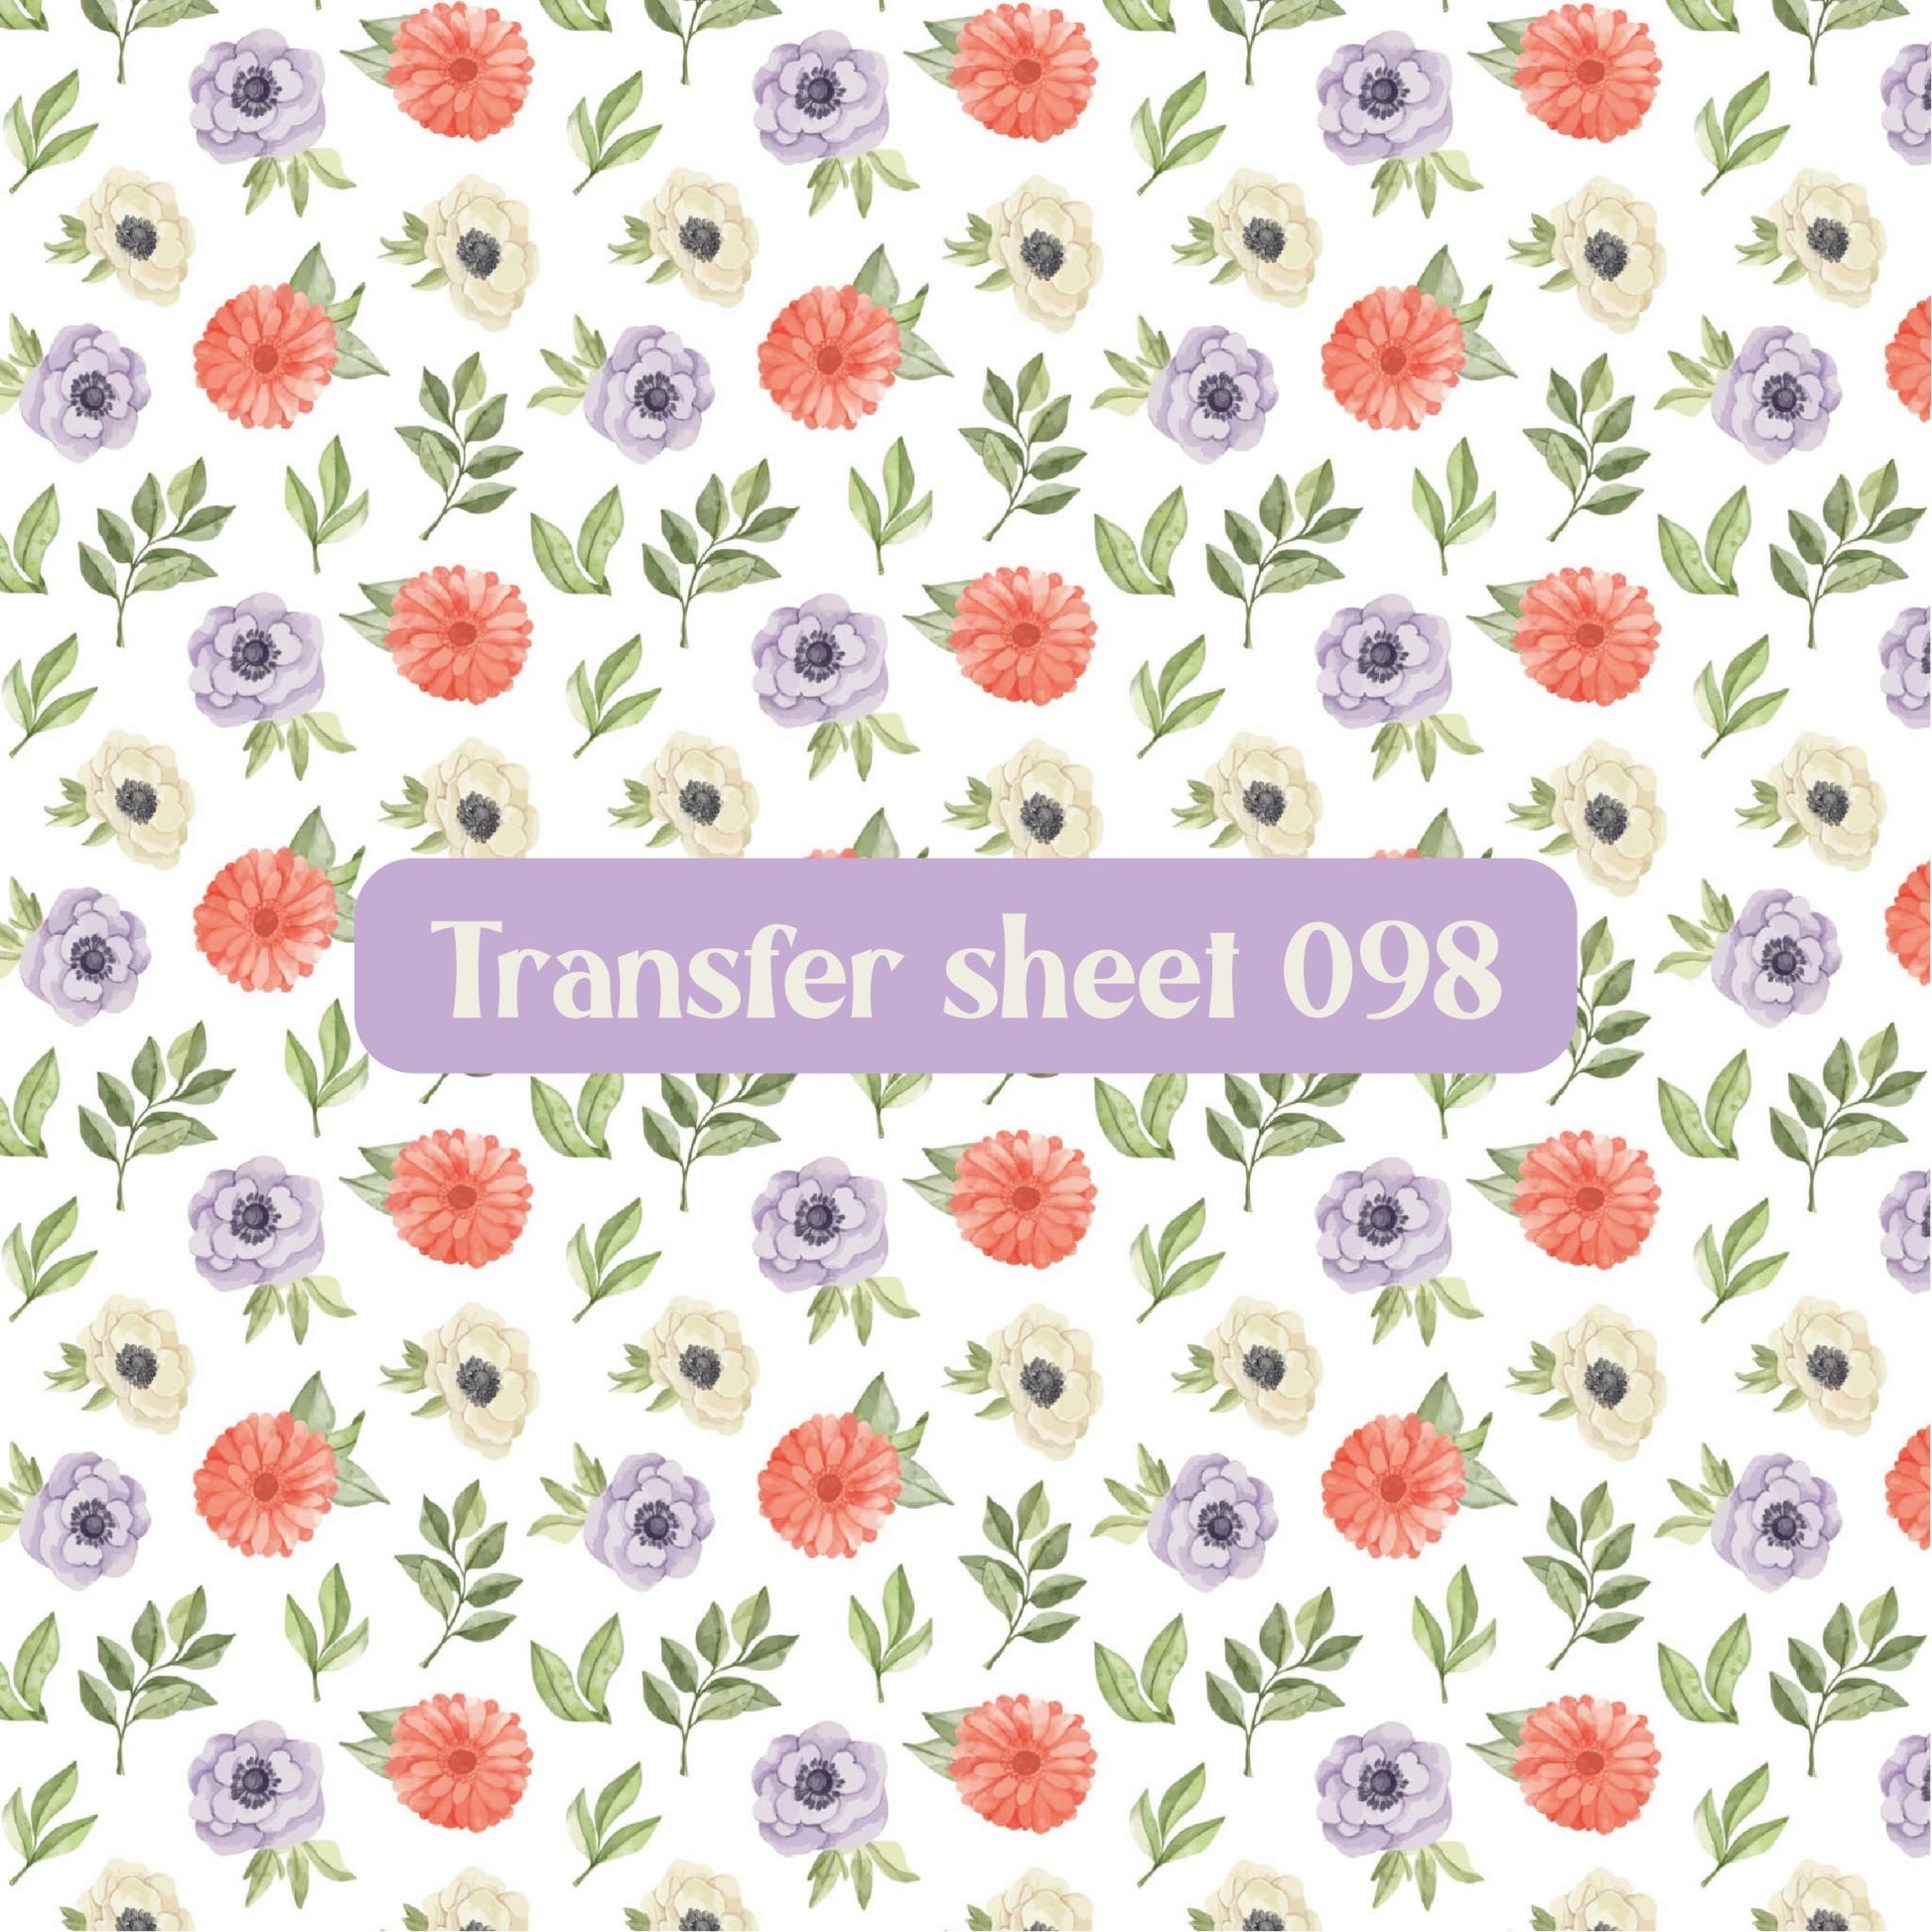 Transfer sheet 098 - Transfer paper - CLN Atelier